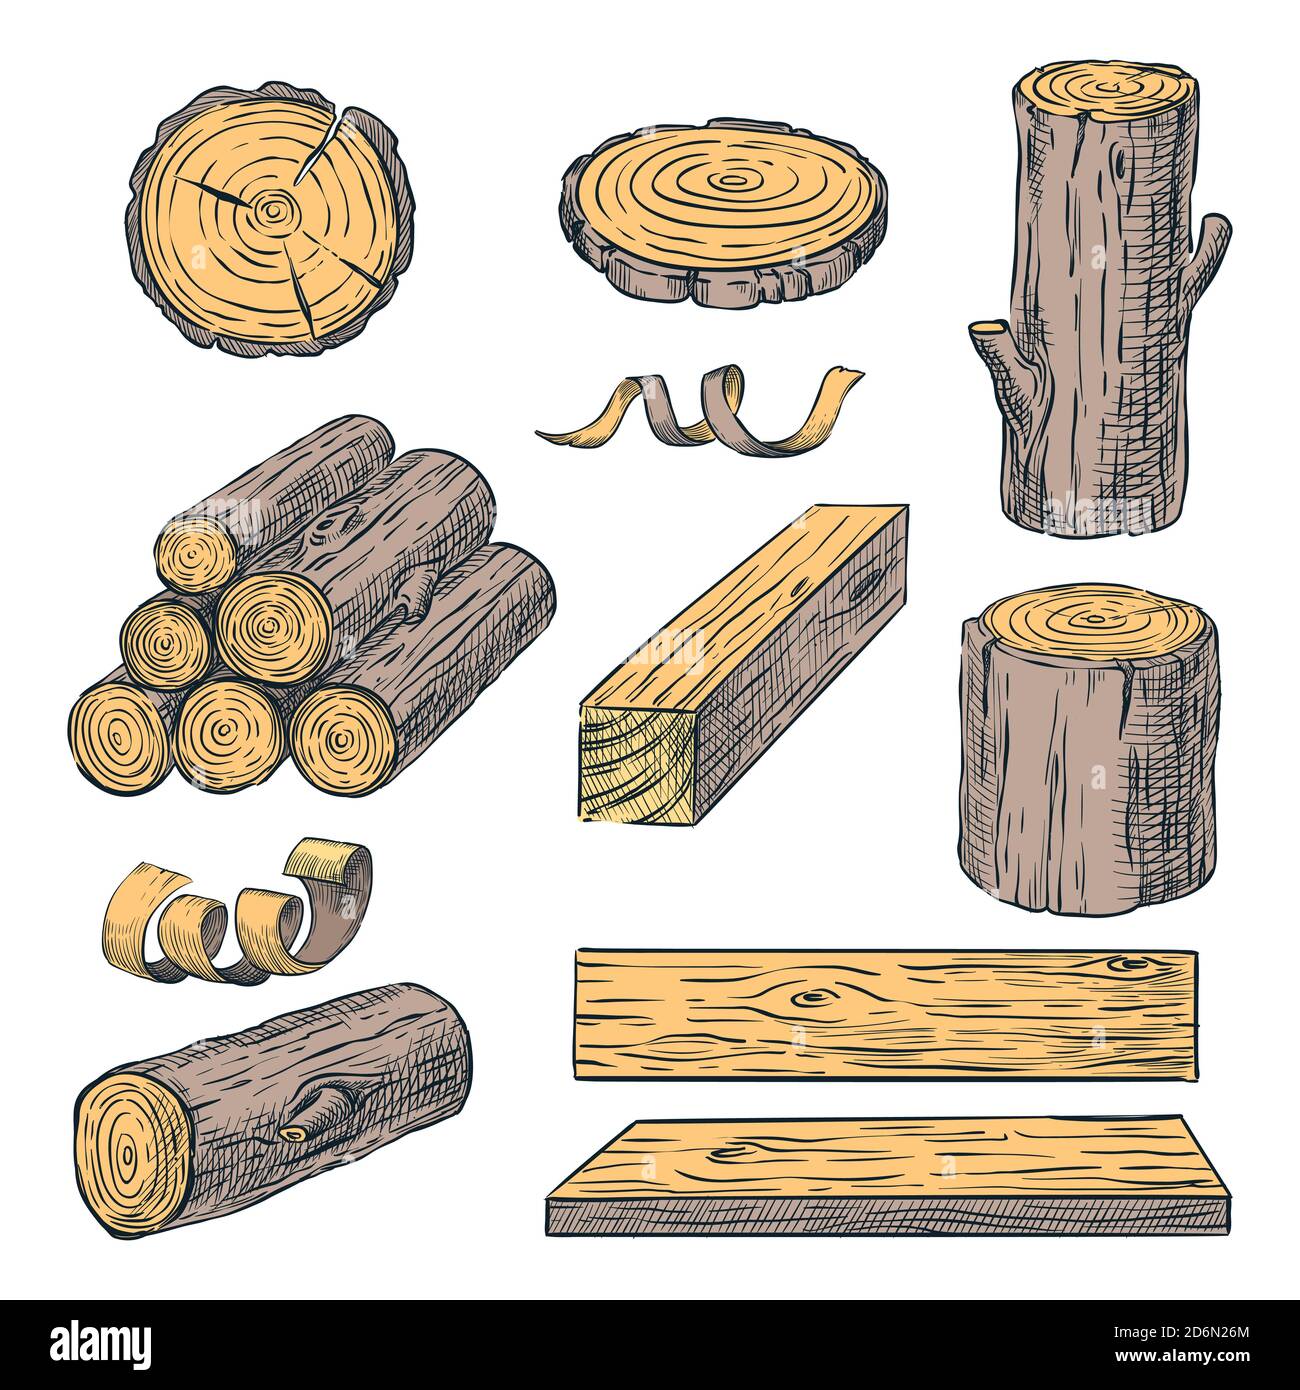 9385 Wood Plank Sketch Images Stock Photos  Vectors  Shutterstock